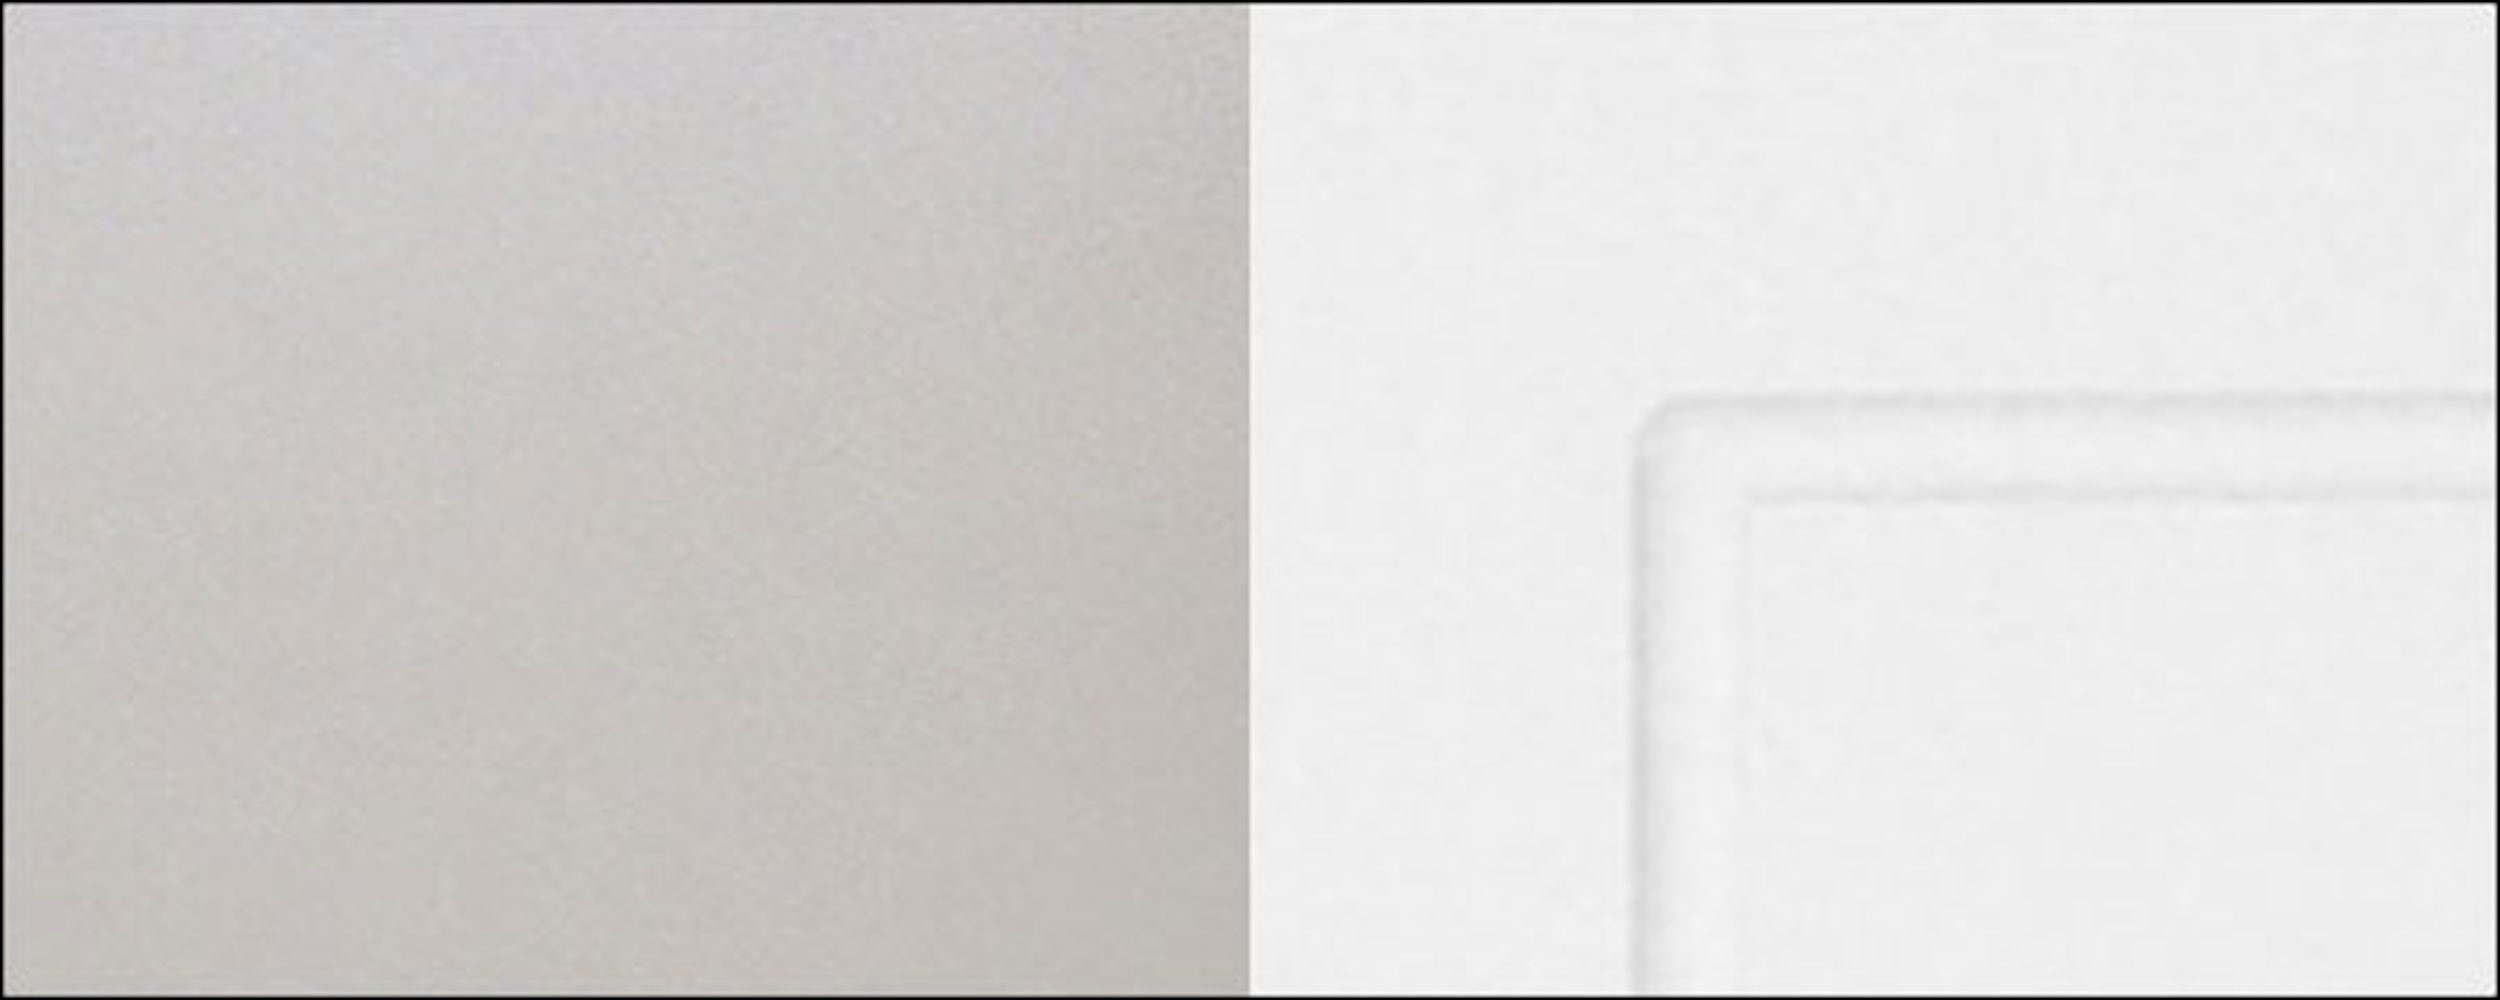 Feldmann-Wohnen Backofenumbauschrank Kvantum (Kvantum) 1 60cm Fach für matt Front- wählbar Korpusfarbe 2-türig & Einbaugerät weiß